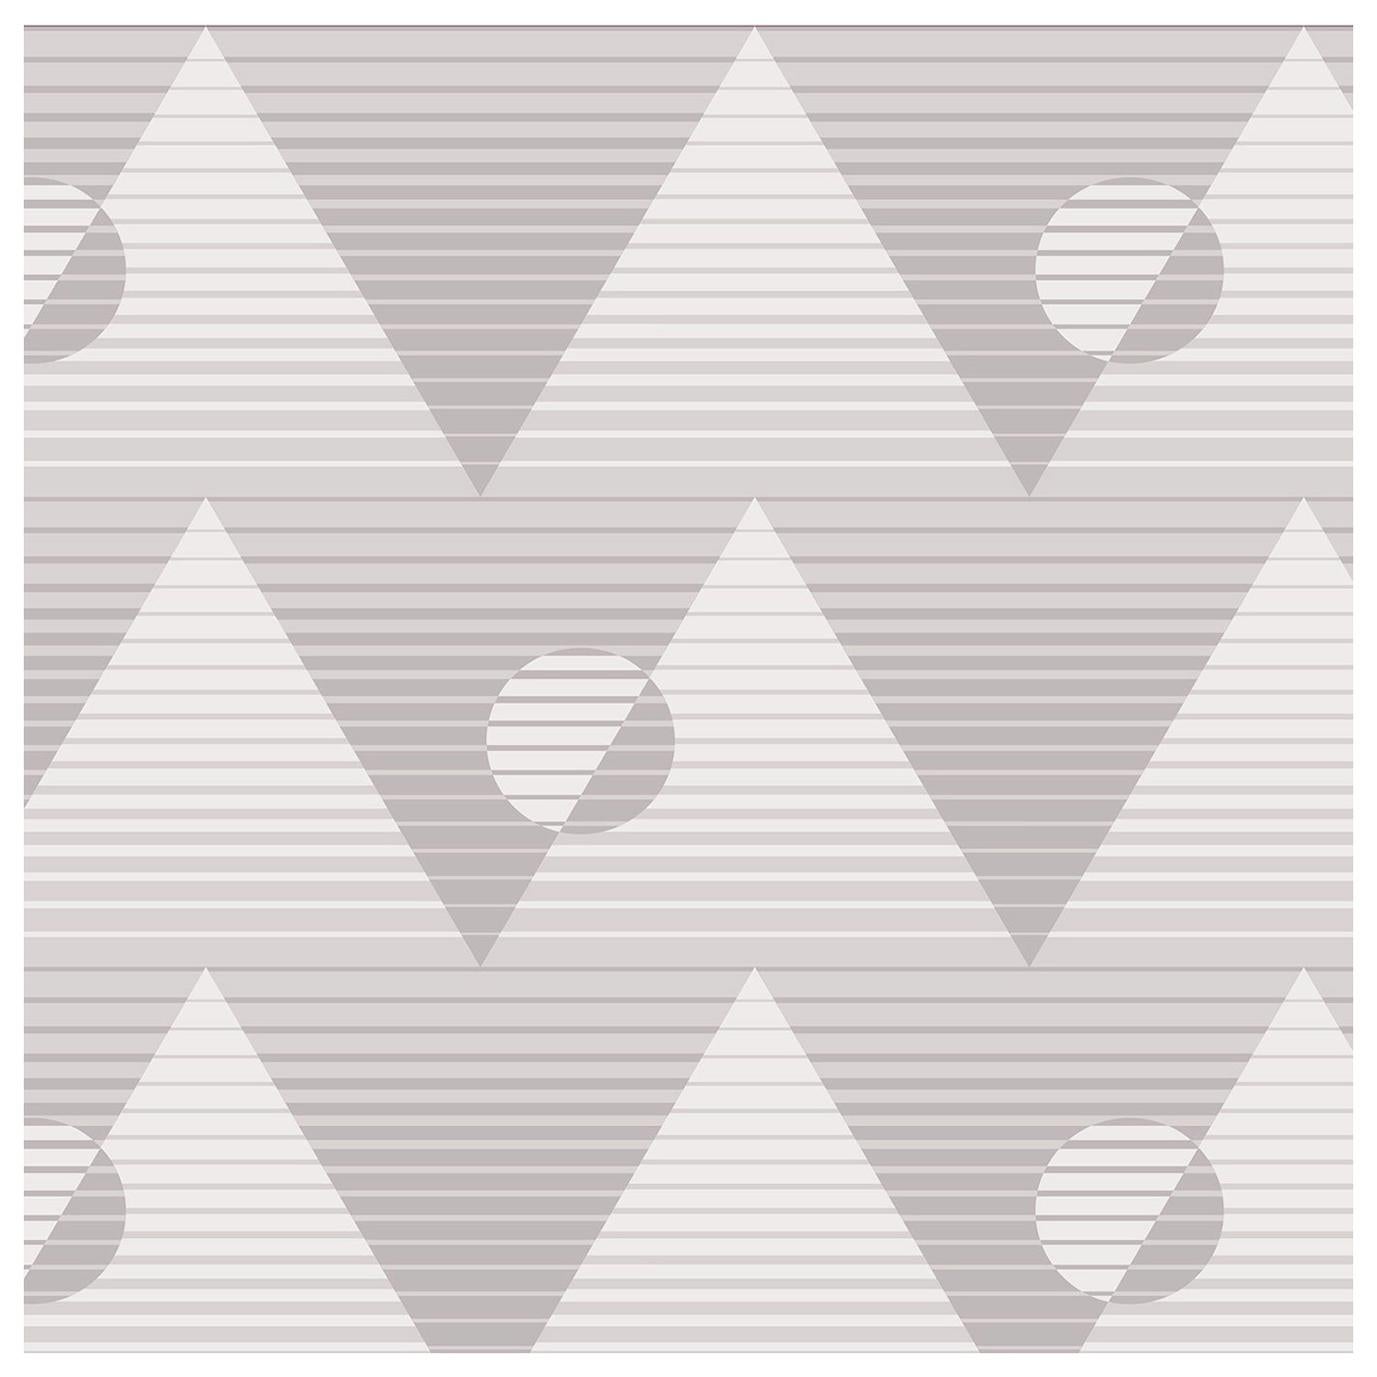 Pyramide du Soleil Designer Wallpaper in Granite 'Warm Grays' For Sale